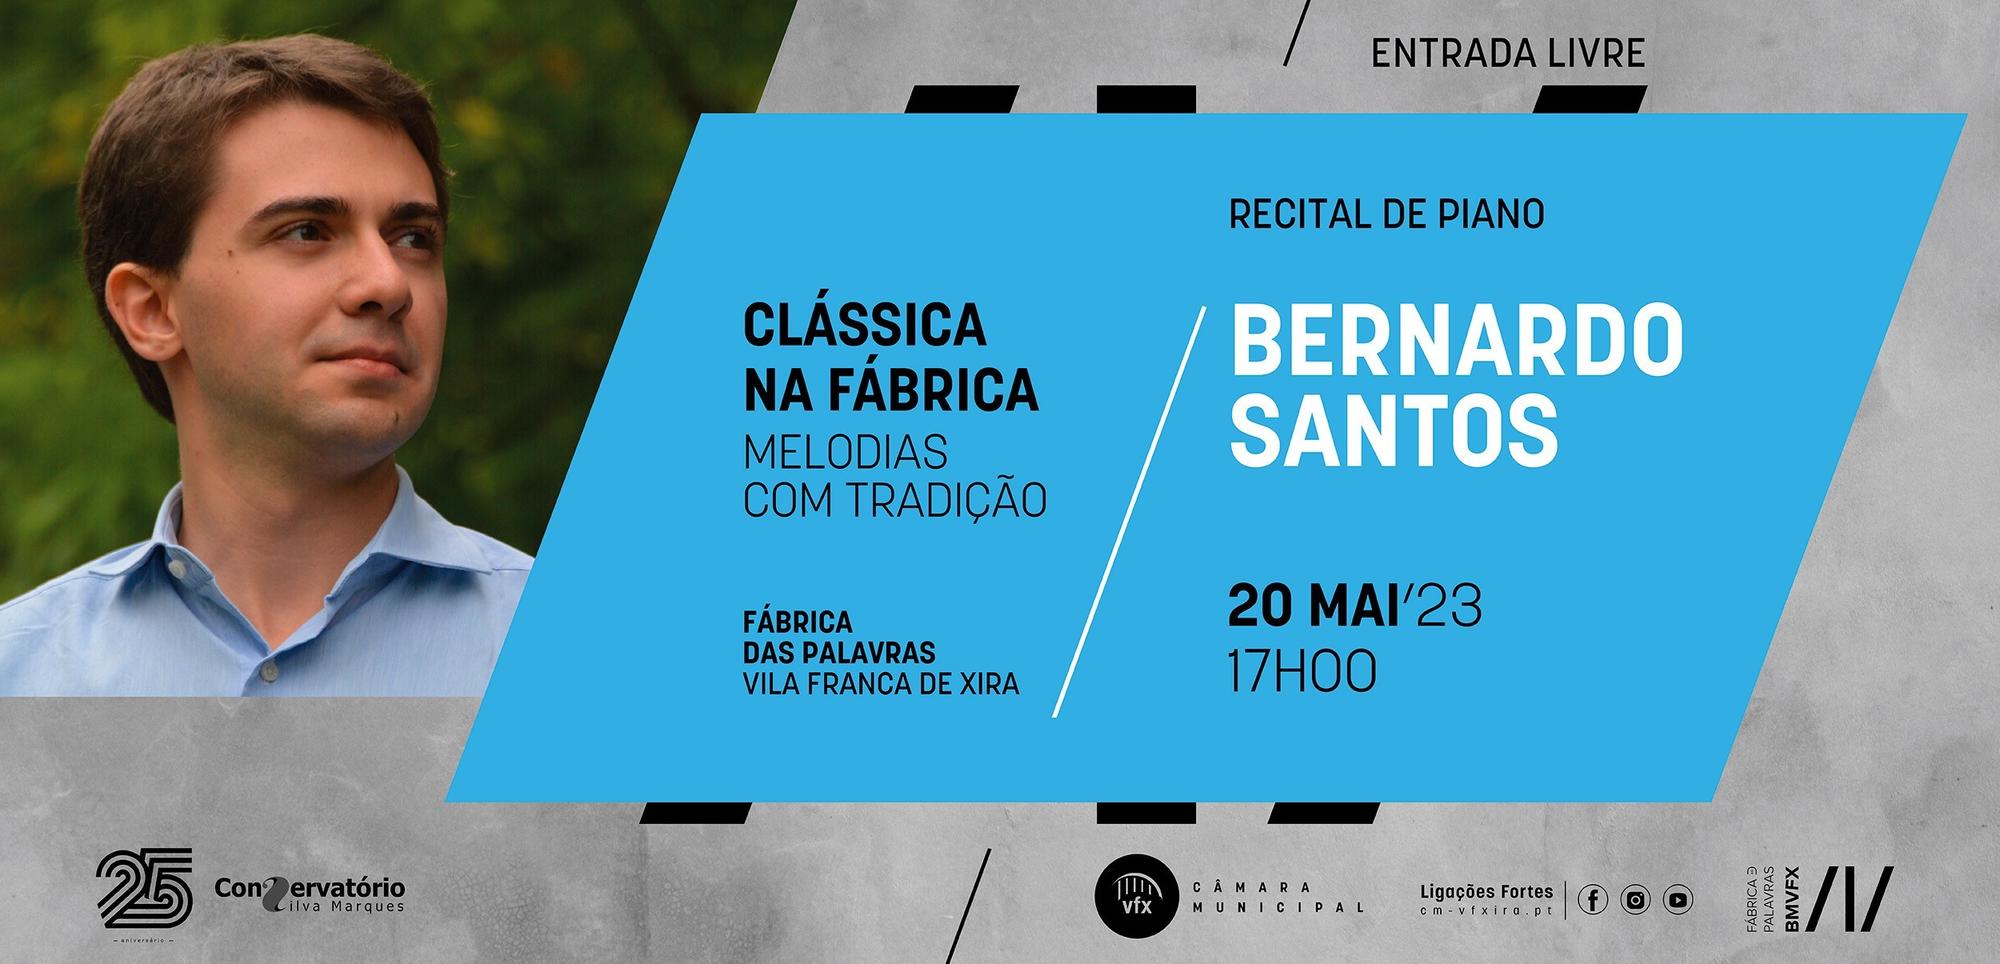 Pianista português apresenta recital na Fábrica